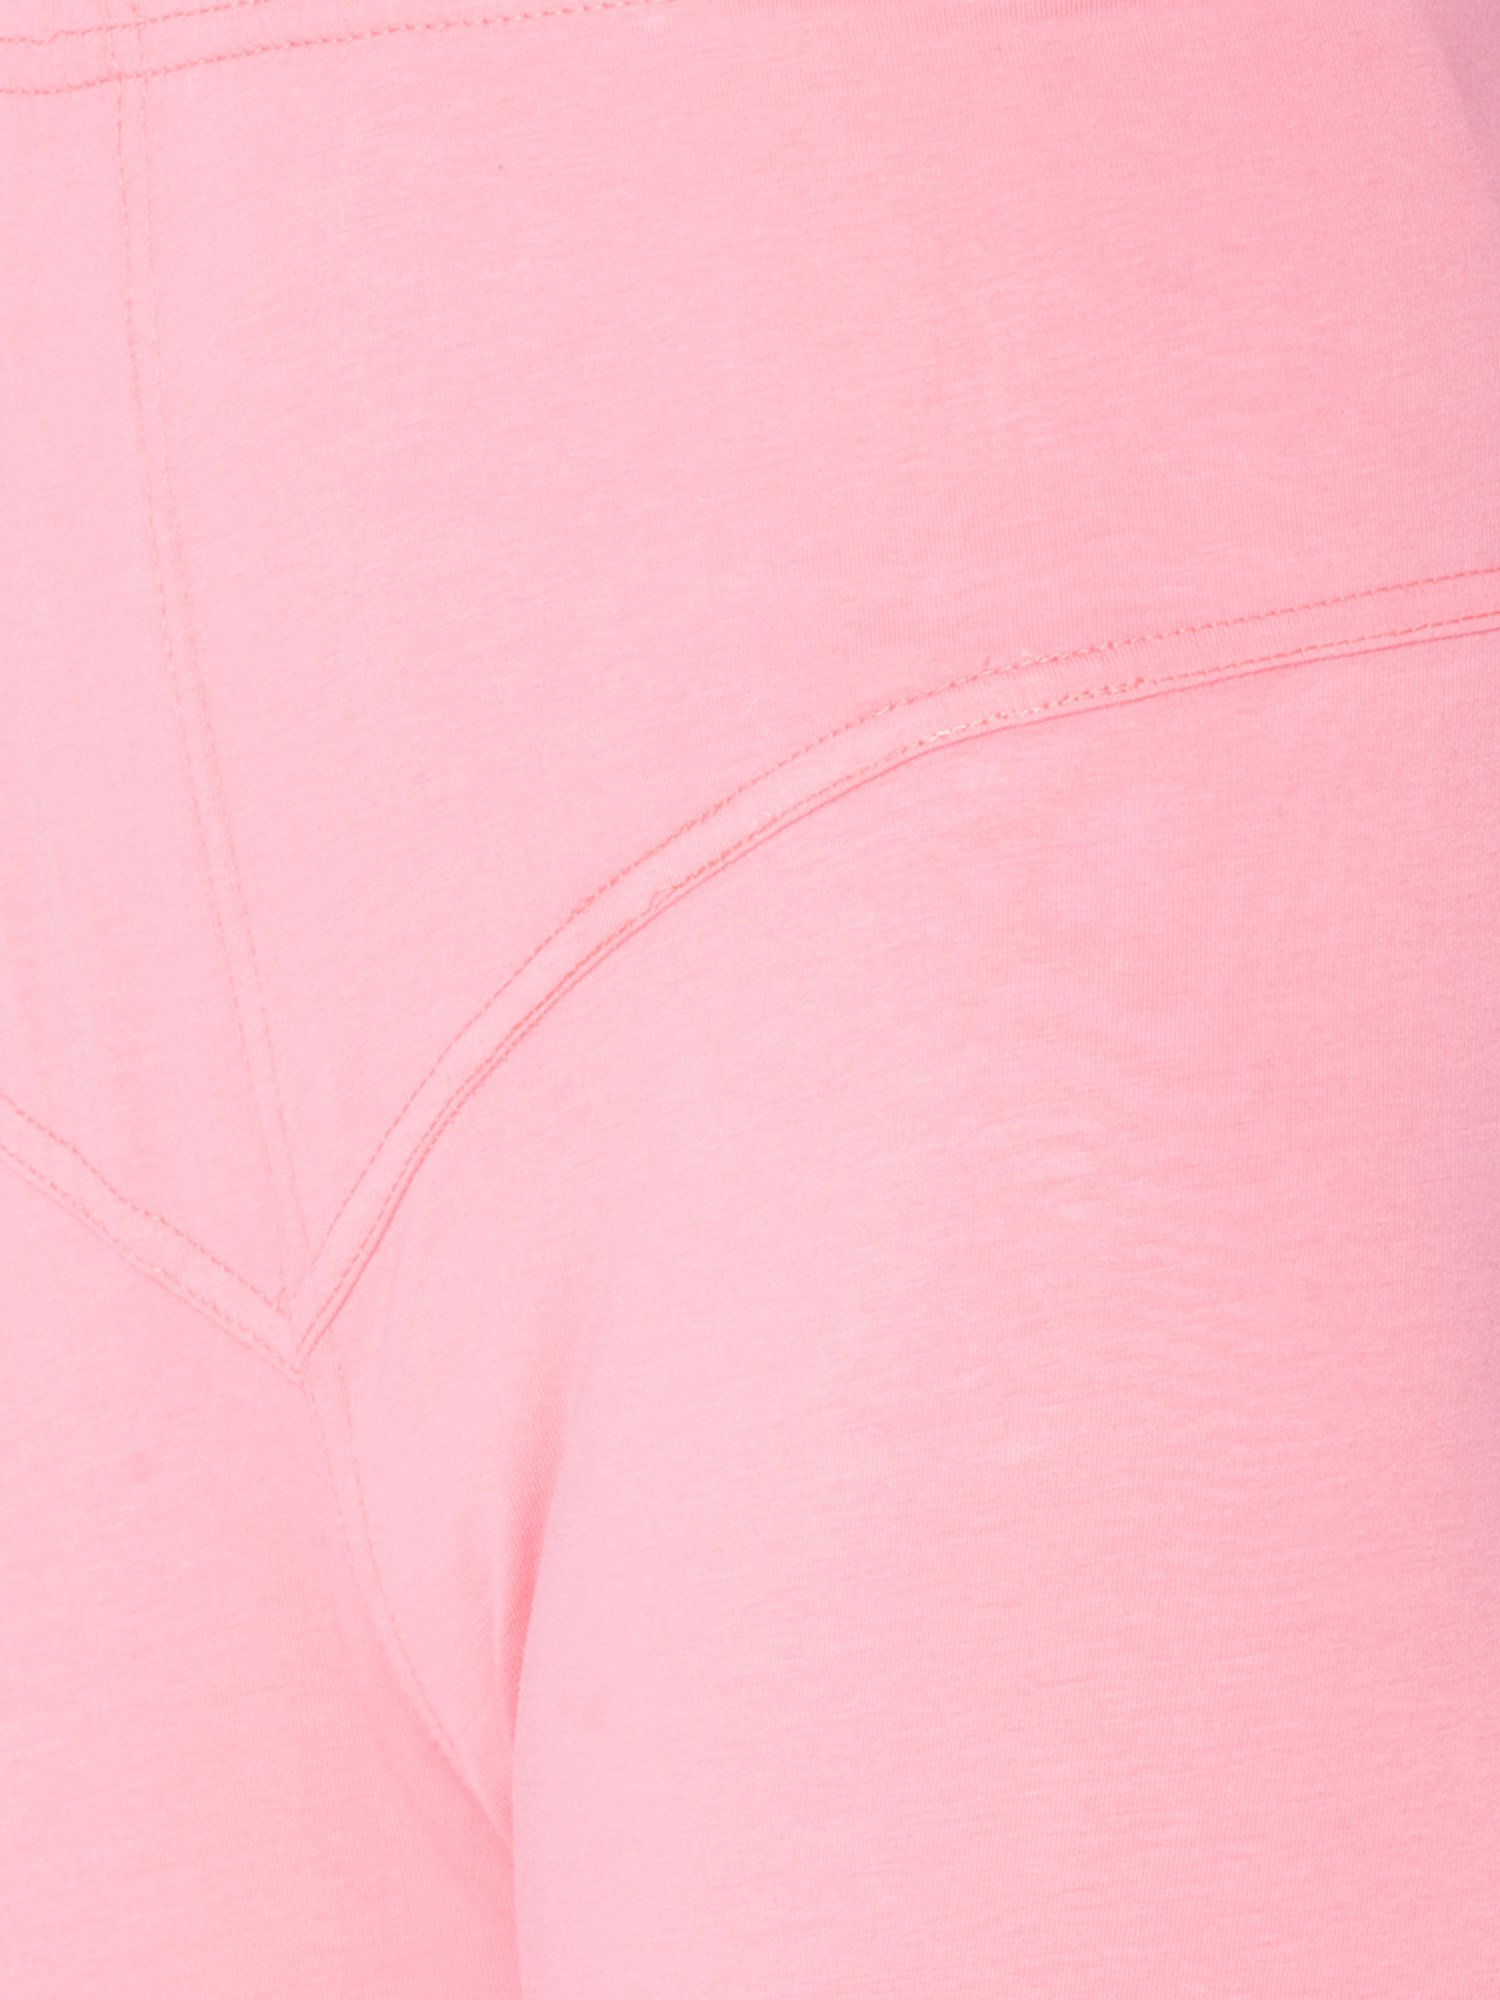 Buy Dollar Missy Pink Cotton Leggings for Women's Online @ Tata CLiQ